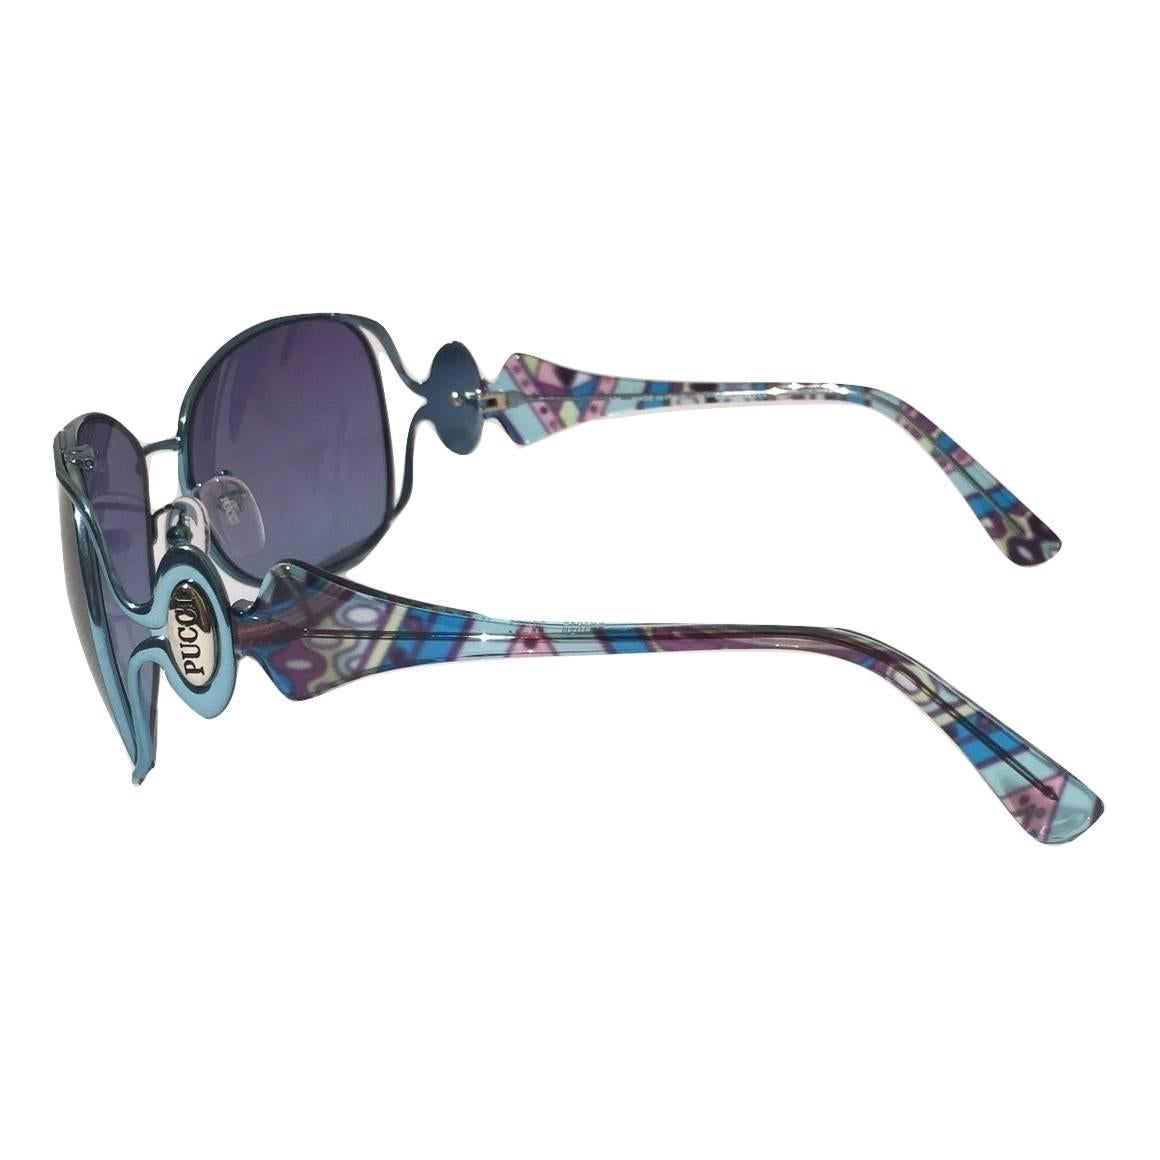 New Emilio Pucci Teal Blue Aviator Sunglasses With Case & Box 2